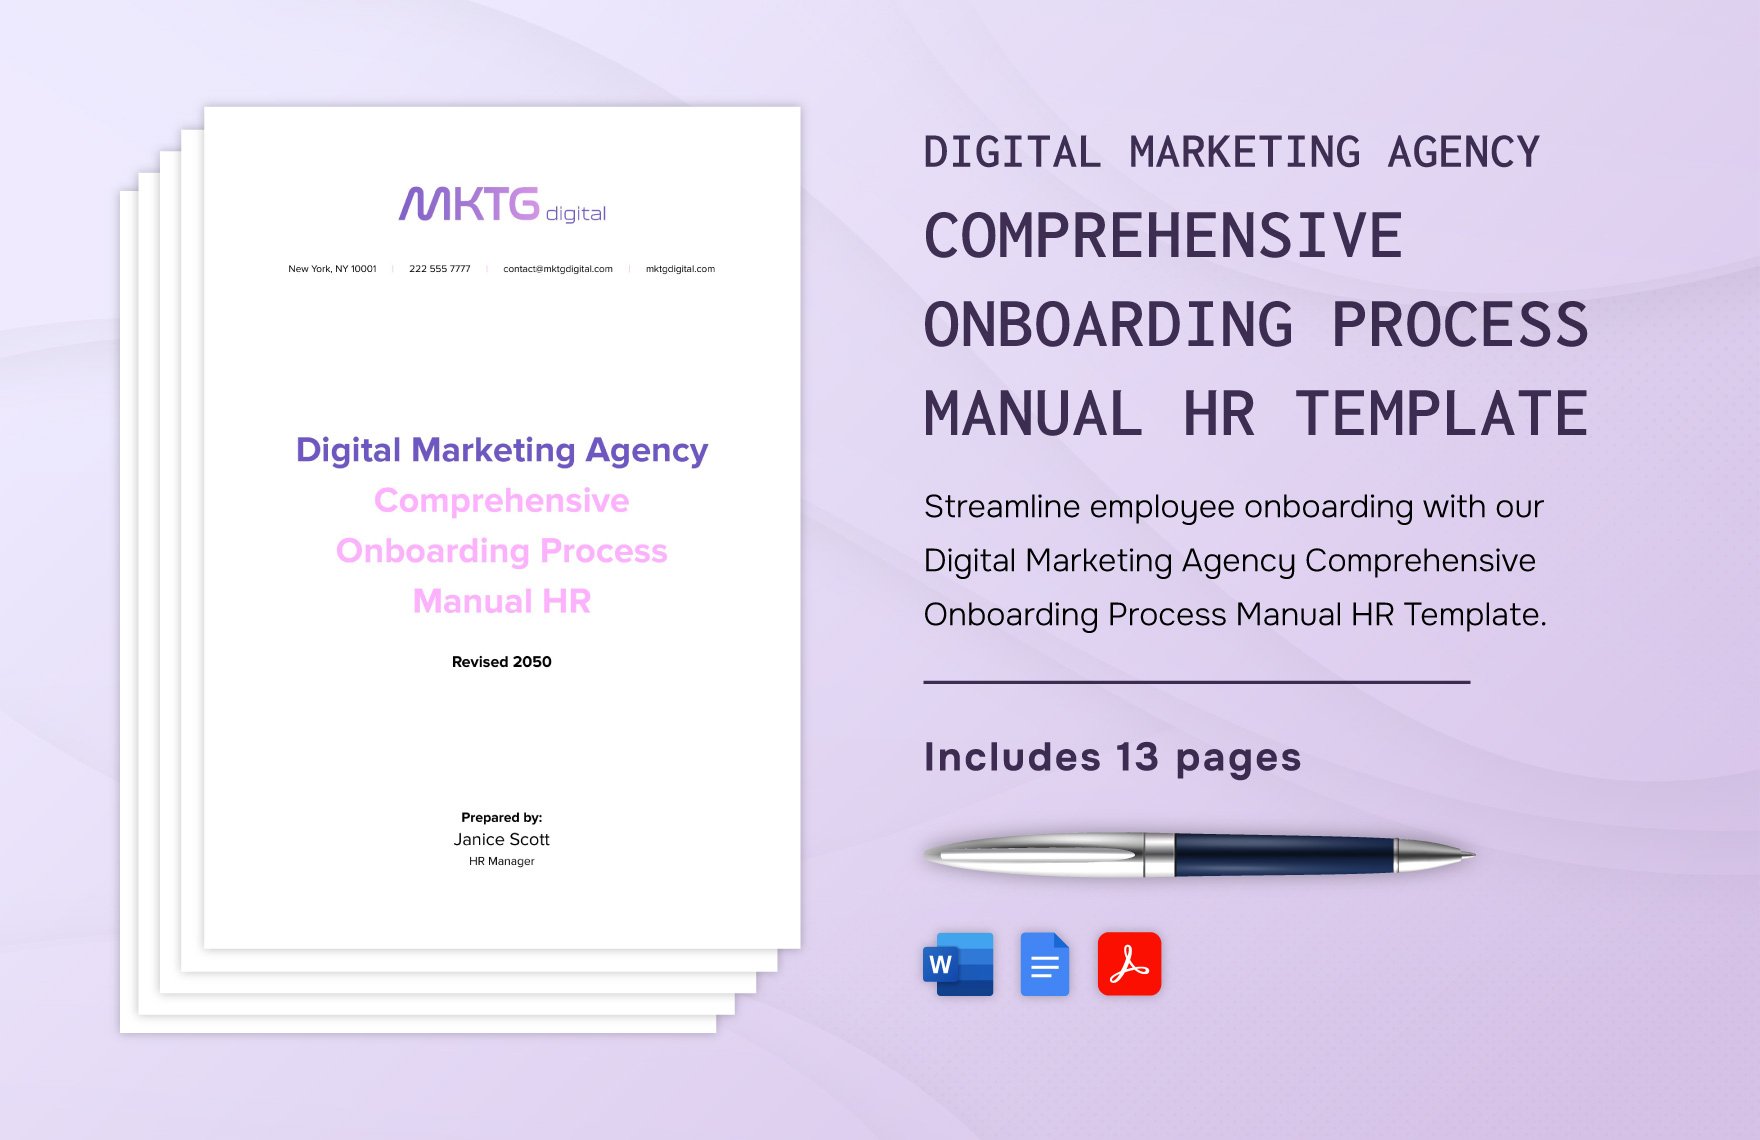 Digital Marketing Agency Comprehensive Onboarding Process Manual HR Template